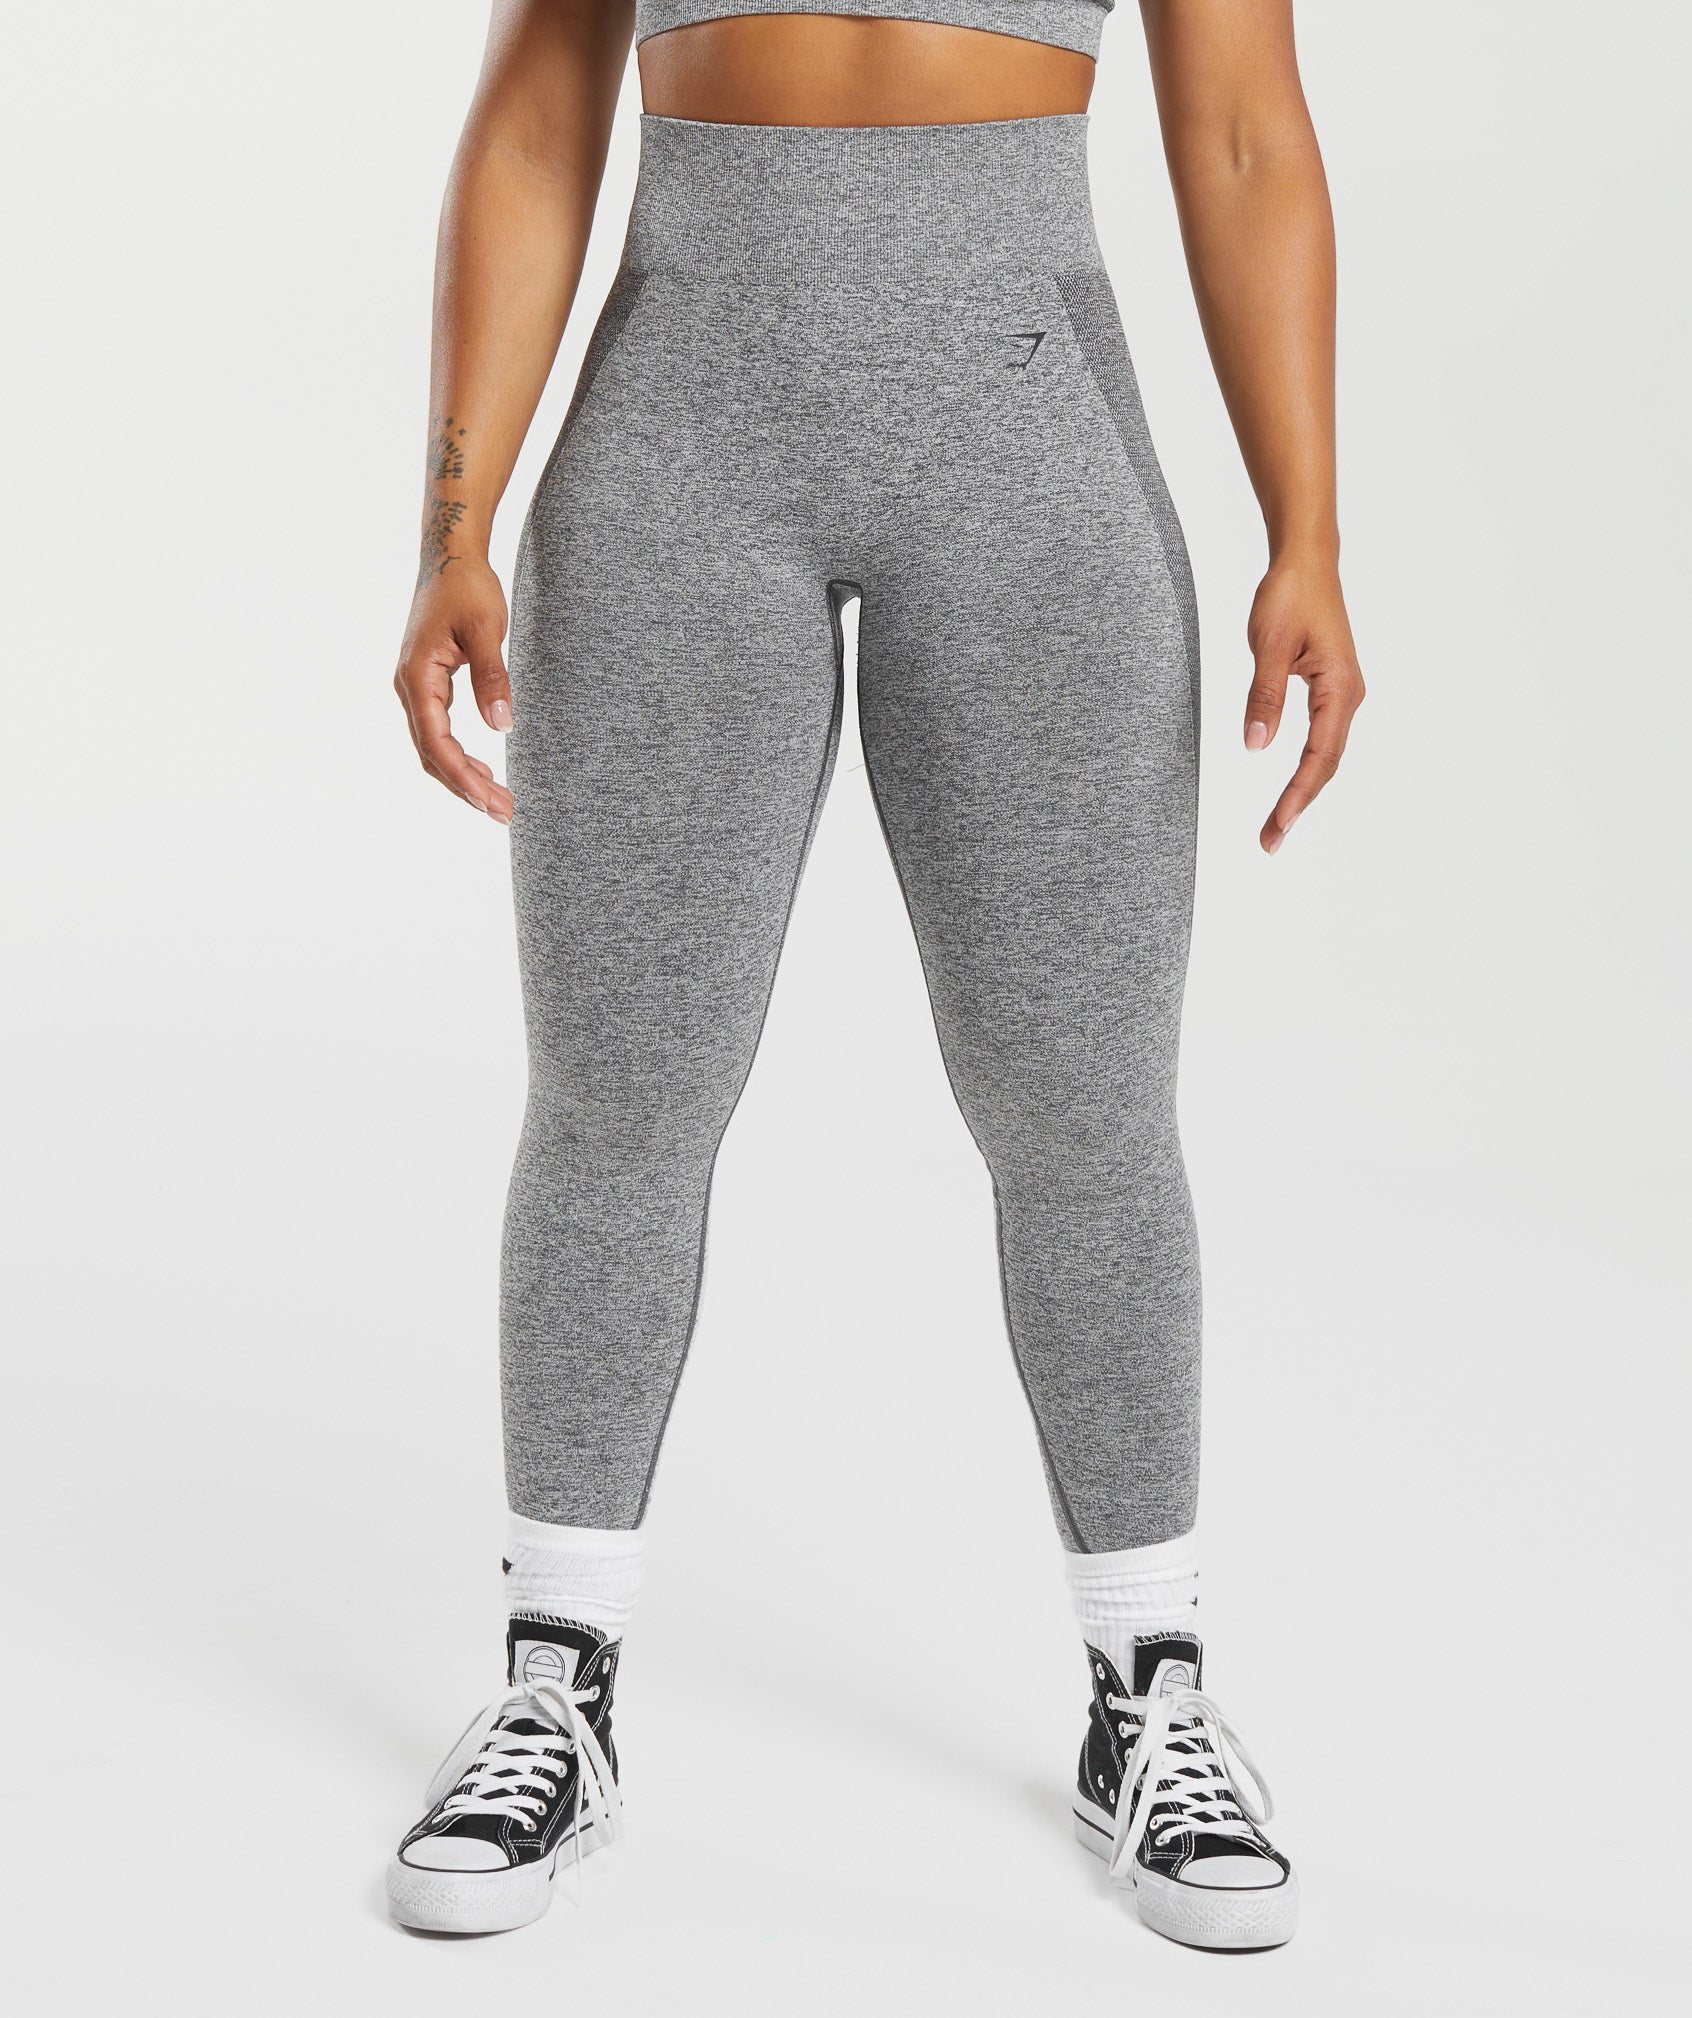 Gymshark Flex High Waisted Leggings Size XS - $40 (20% Off Retail